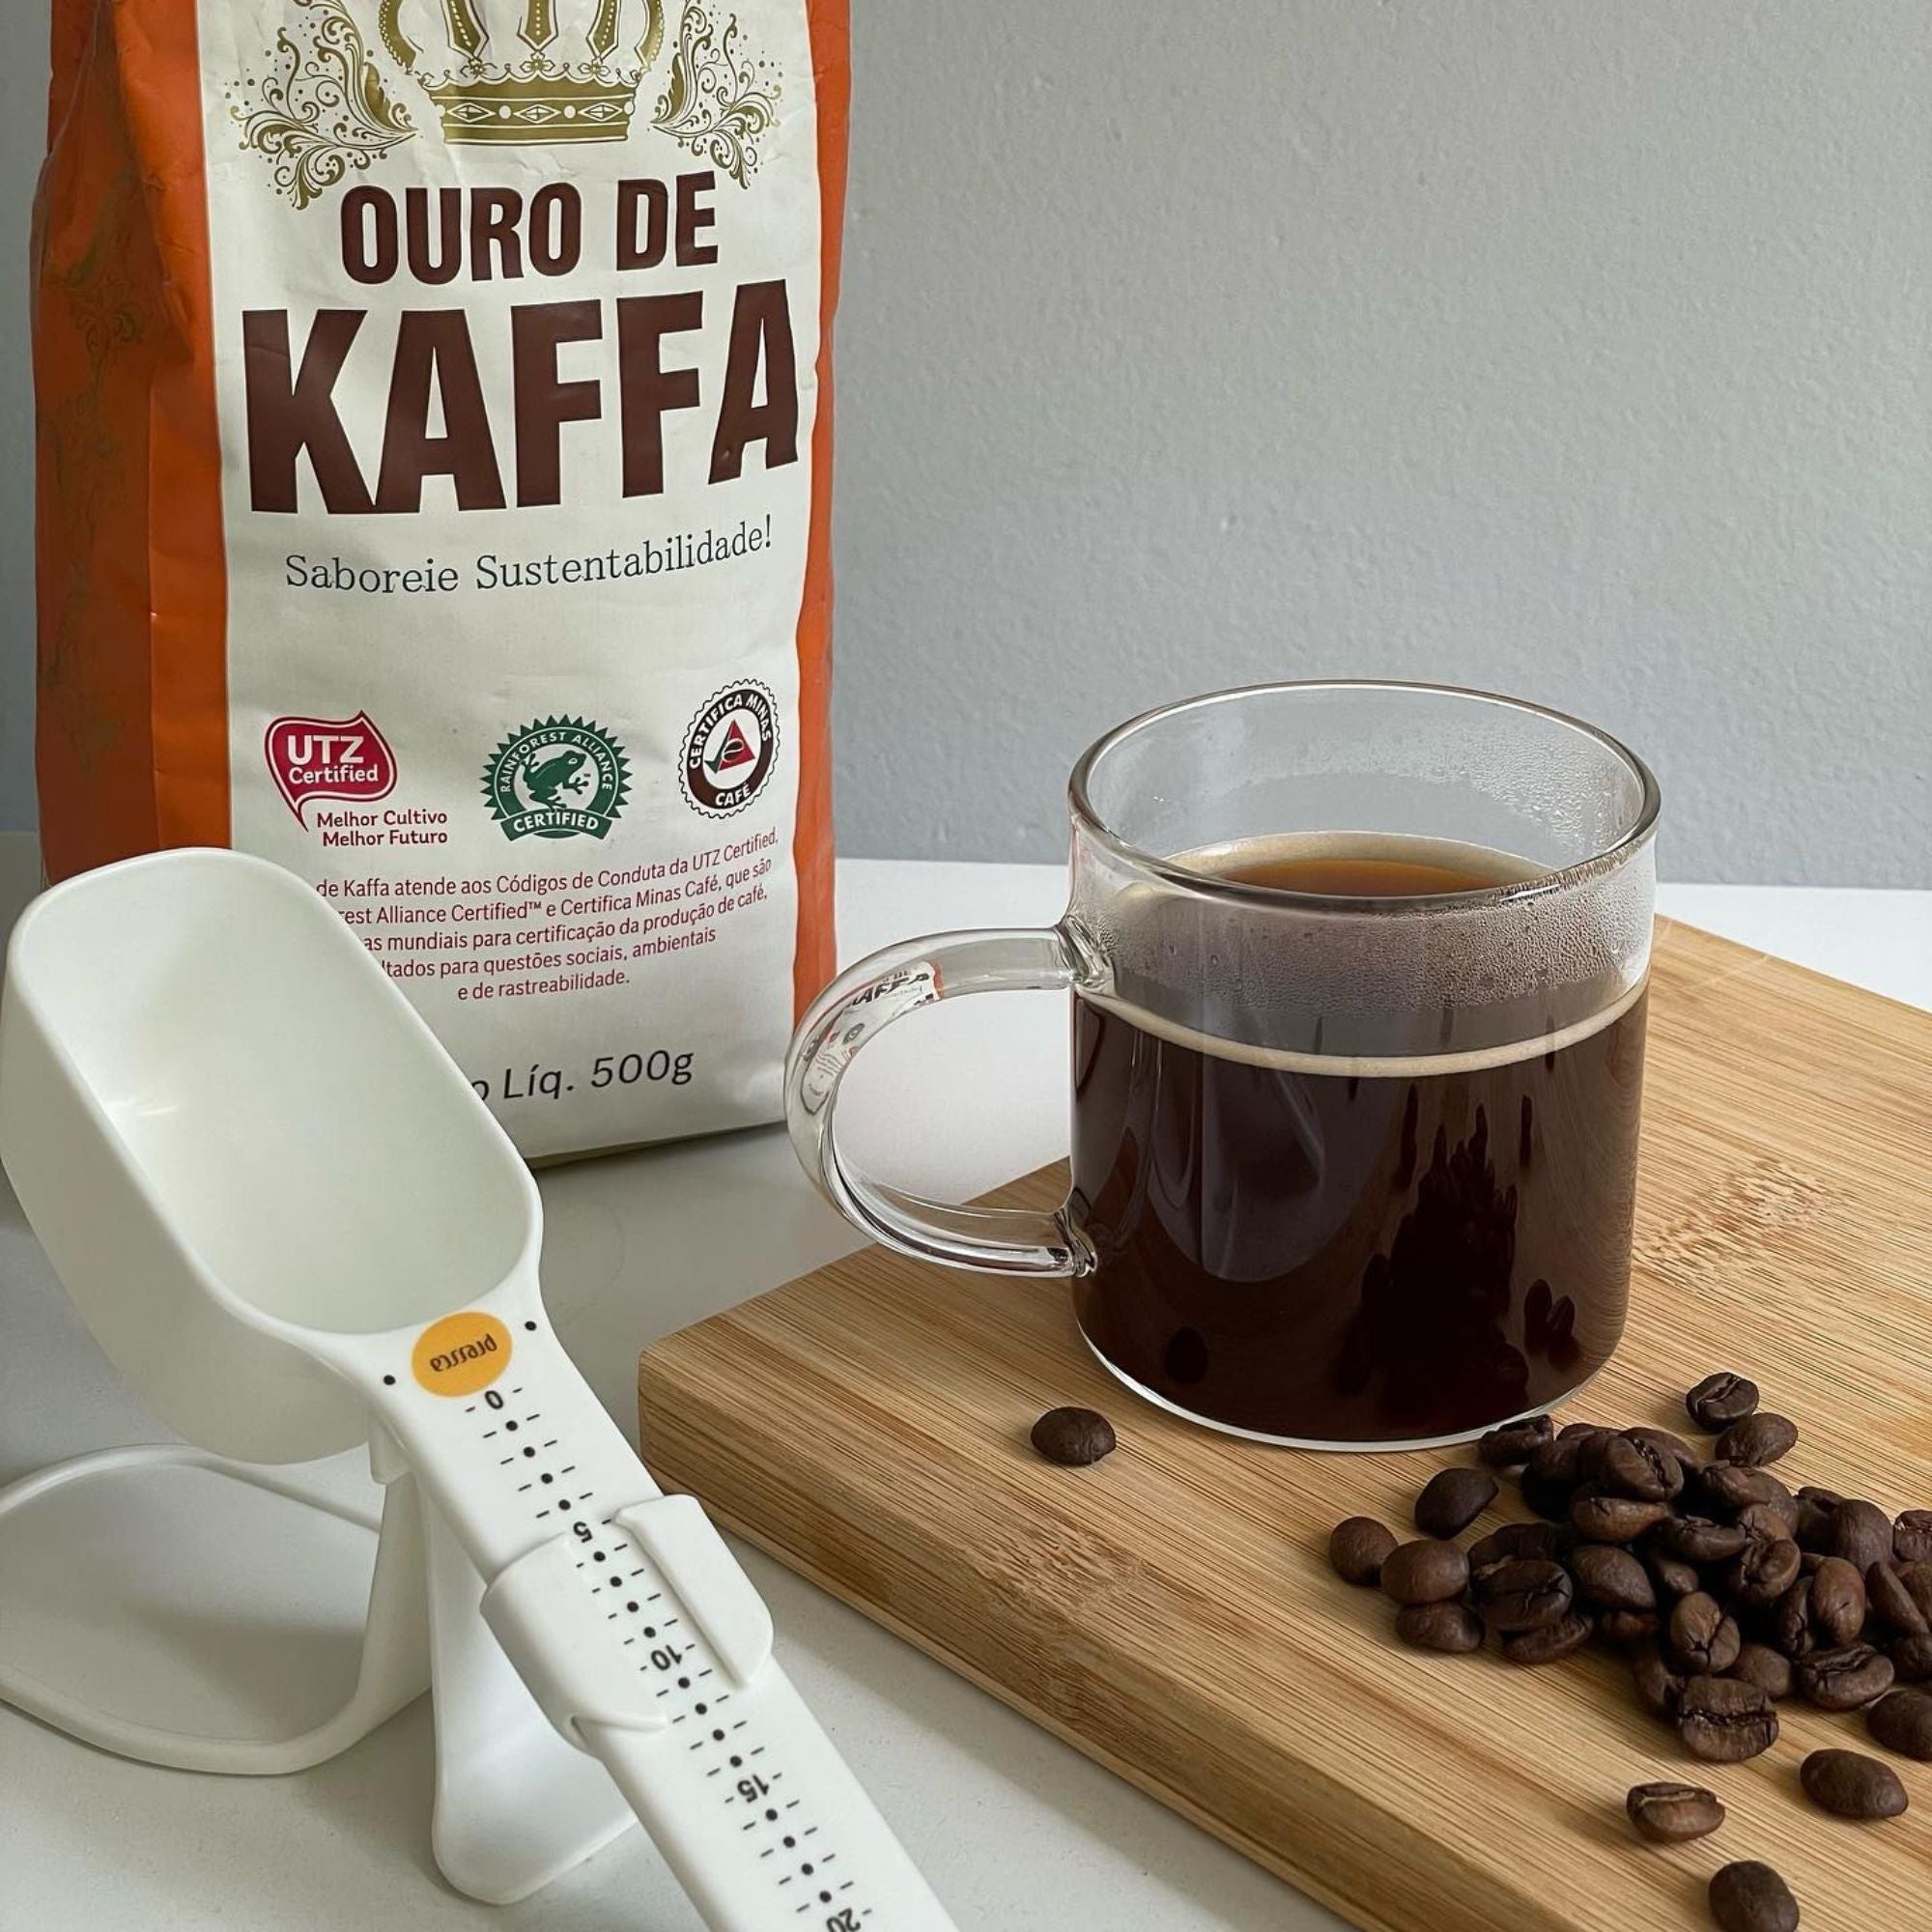 smtcoffee scale with ouro de kaffa coffee